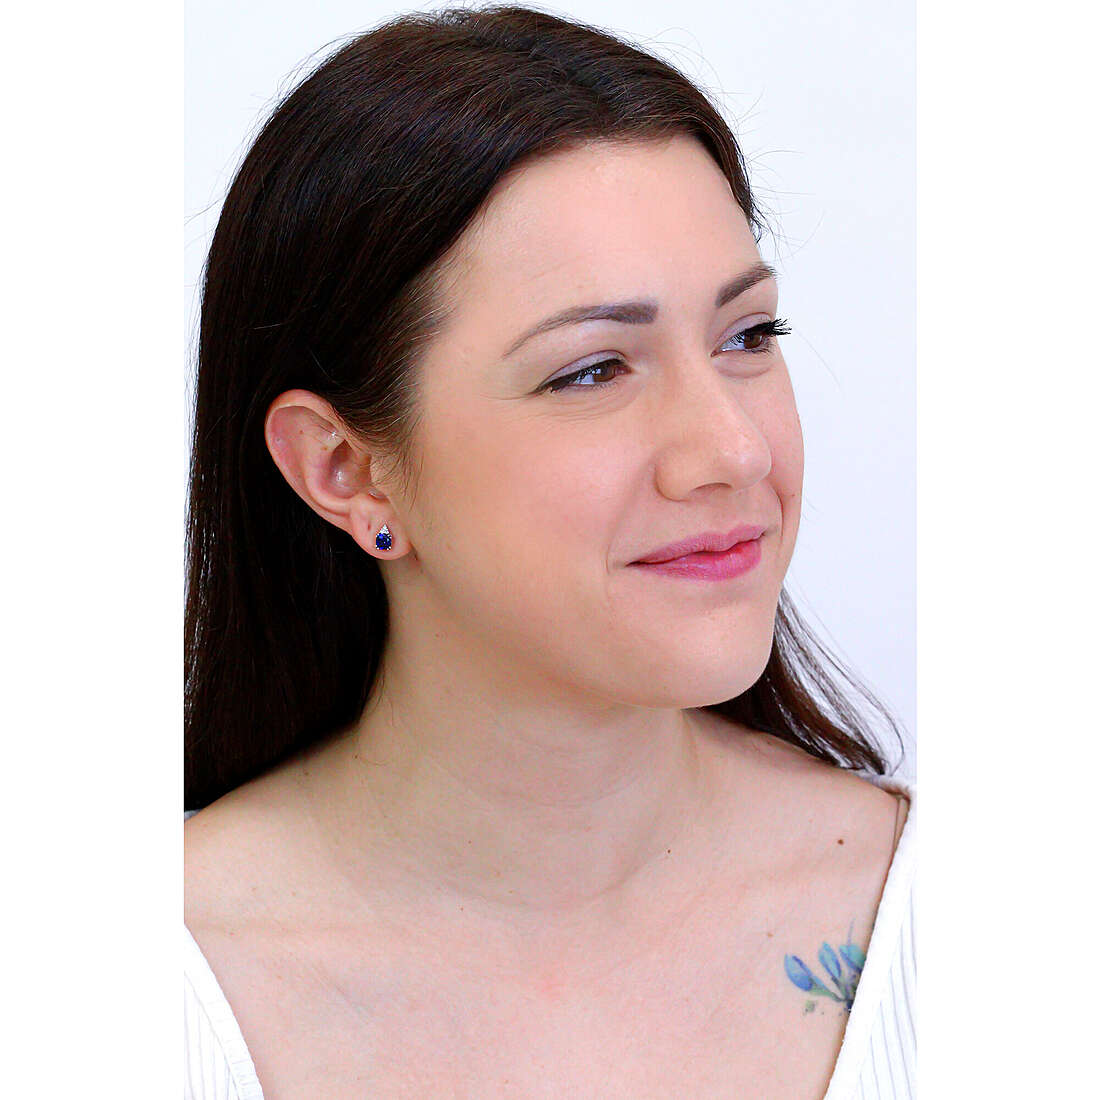 Comete earrings Storia di Luce woman ORB 989 wearing